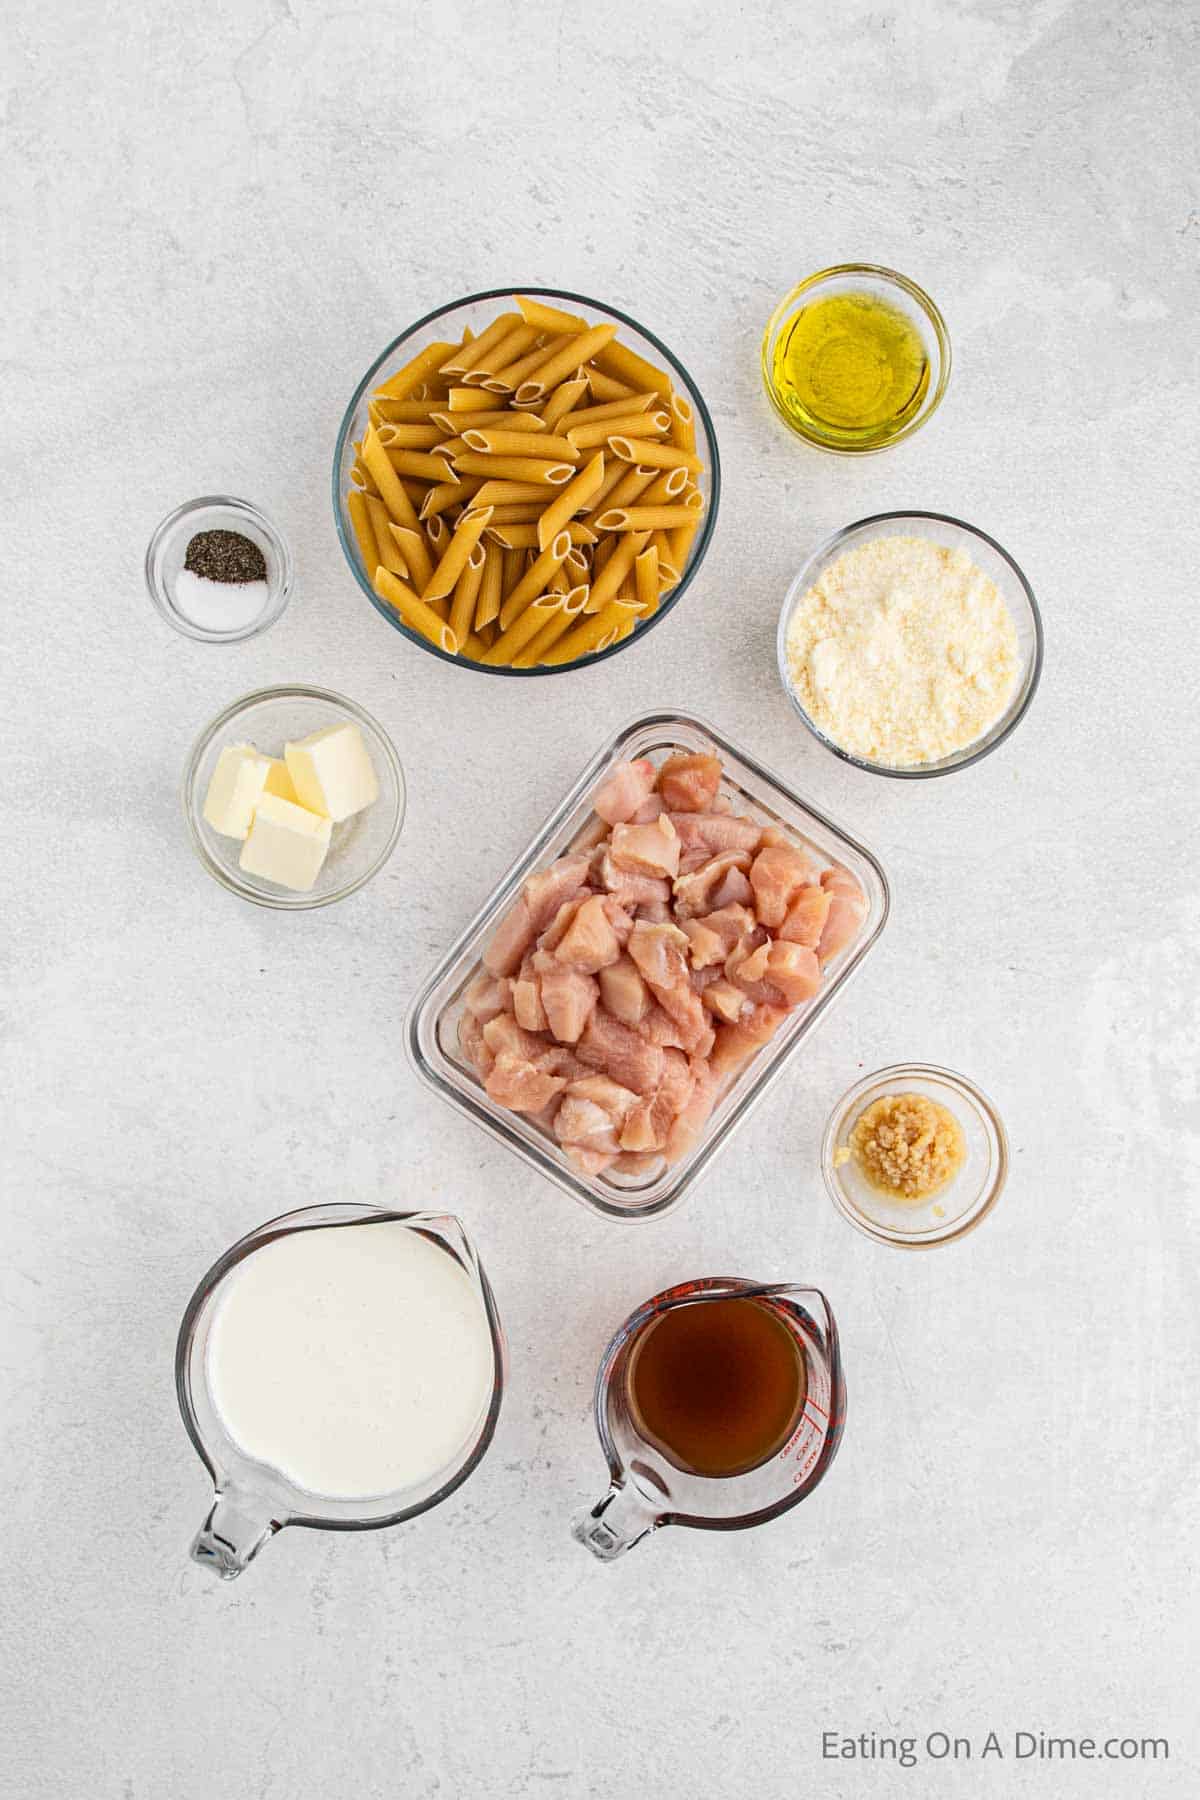 Ingredients for chicken penne pasta - chicken, olive oil, salt and pepper, garlic butter, heavy cream, broth, parmesan cheese, pasta